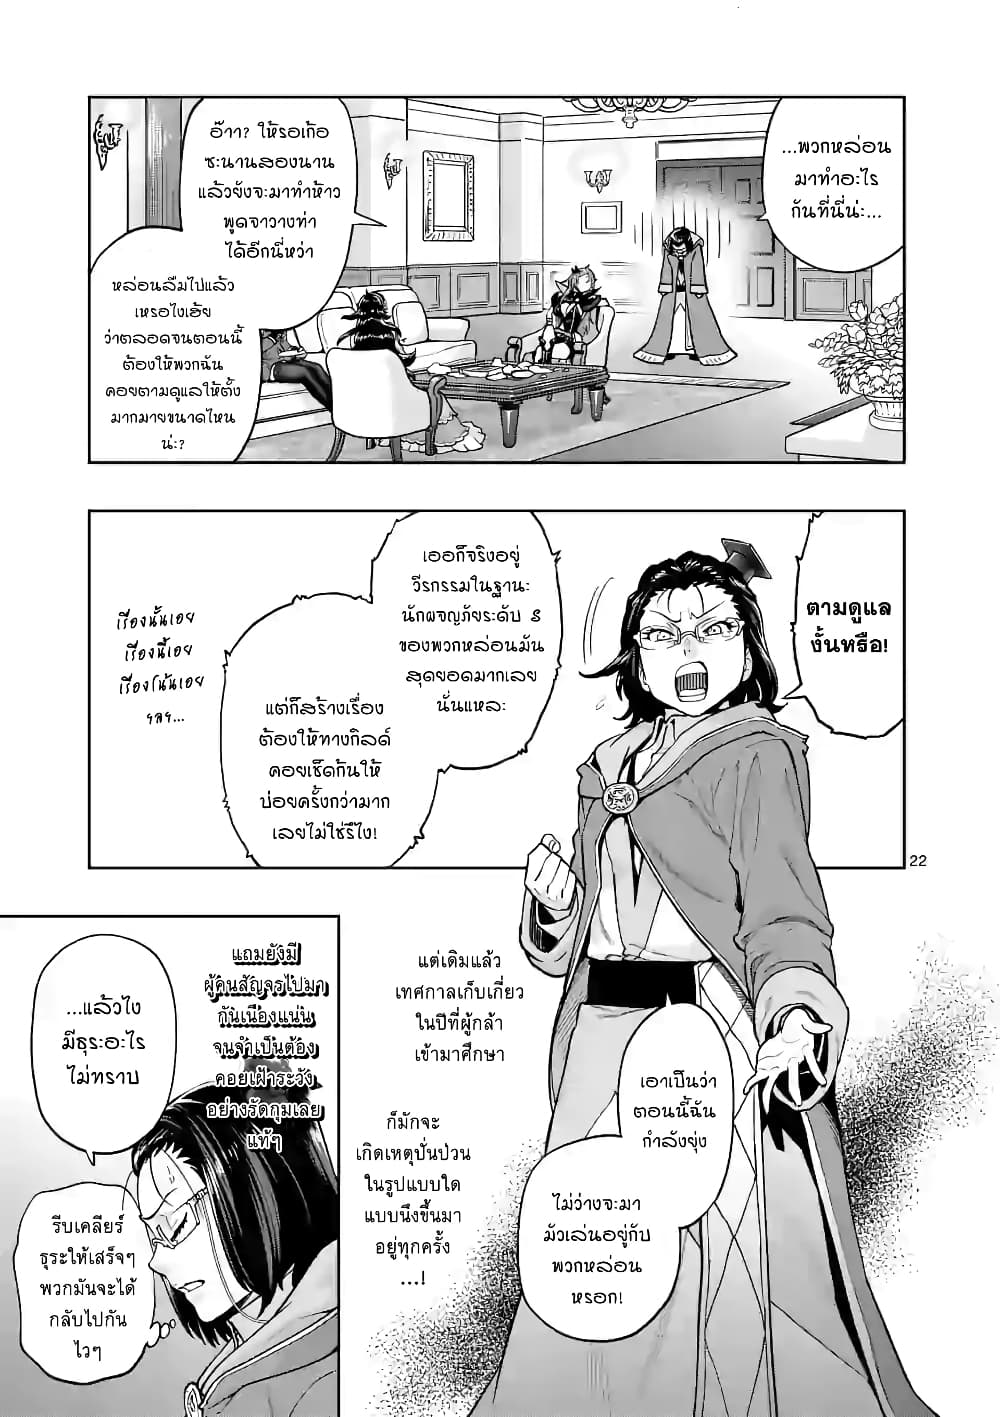 Saikyou onna sisho tachi ga Ikusei houshin wo megute SYURABA เหล่าอาจารย์หญิงสุดแกร่งเค้าตีกันเรื่องแนวทางการฝึกจนวอดวายหมดแล้ว 1-ความกลัดกลุ้มของเหล่าแกร่งสุดในโลก